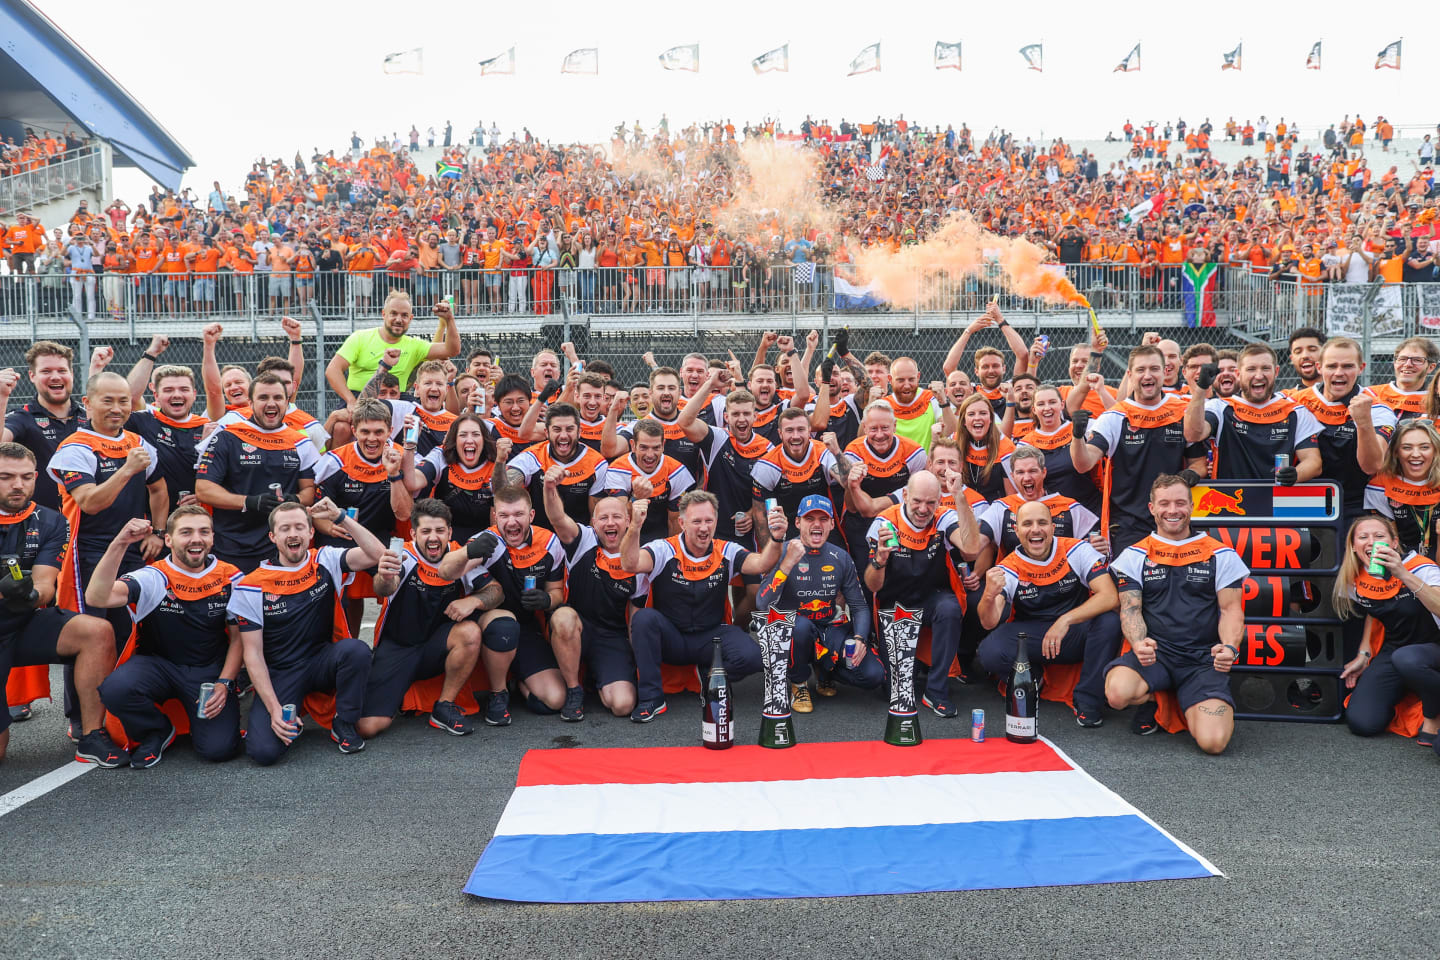 ZANDVOORT, NETHERLANDS - SEPTEMBER 04: Max Verstappen of Red Bull Racing and The Netherlands